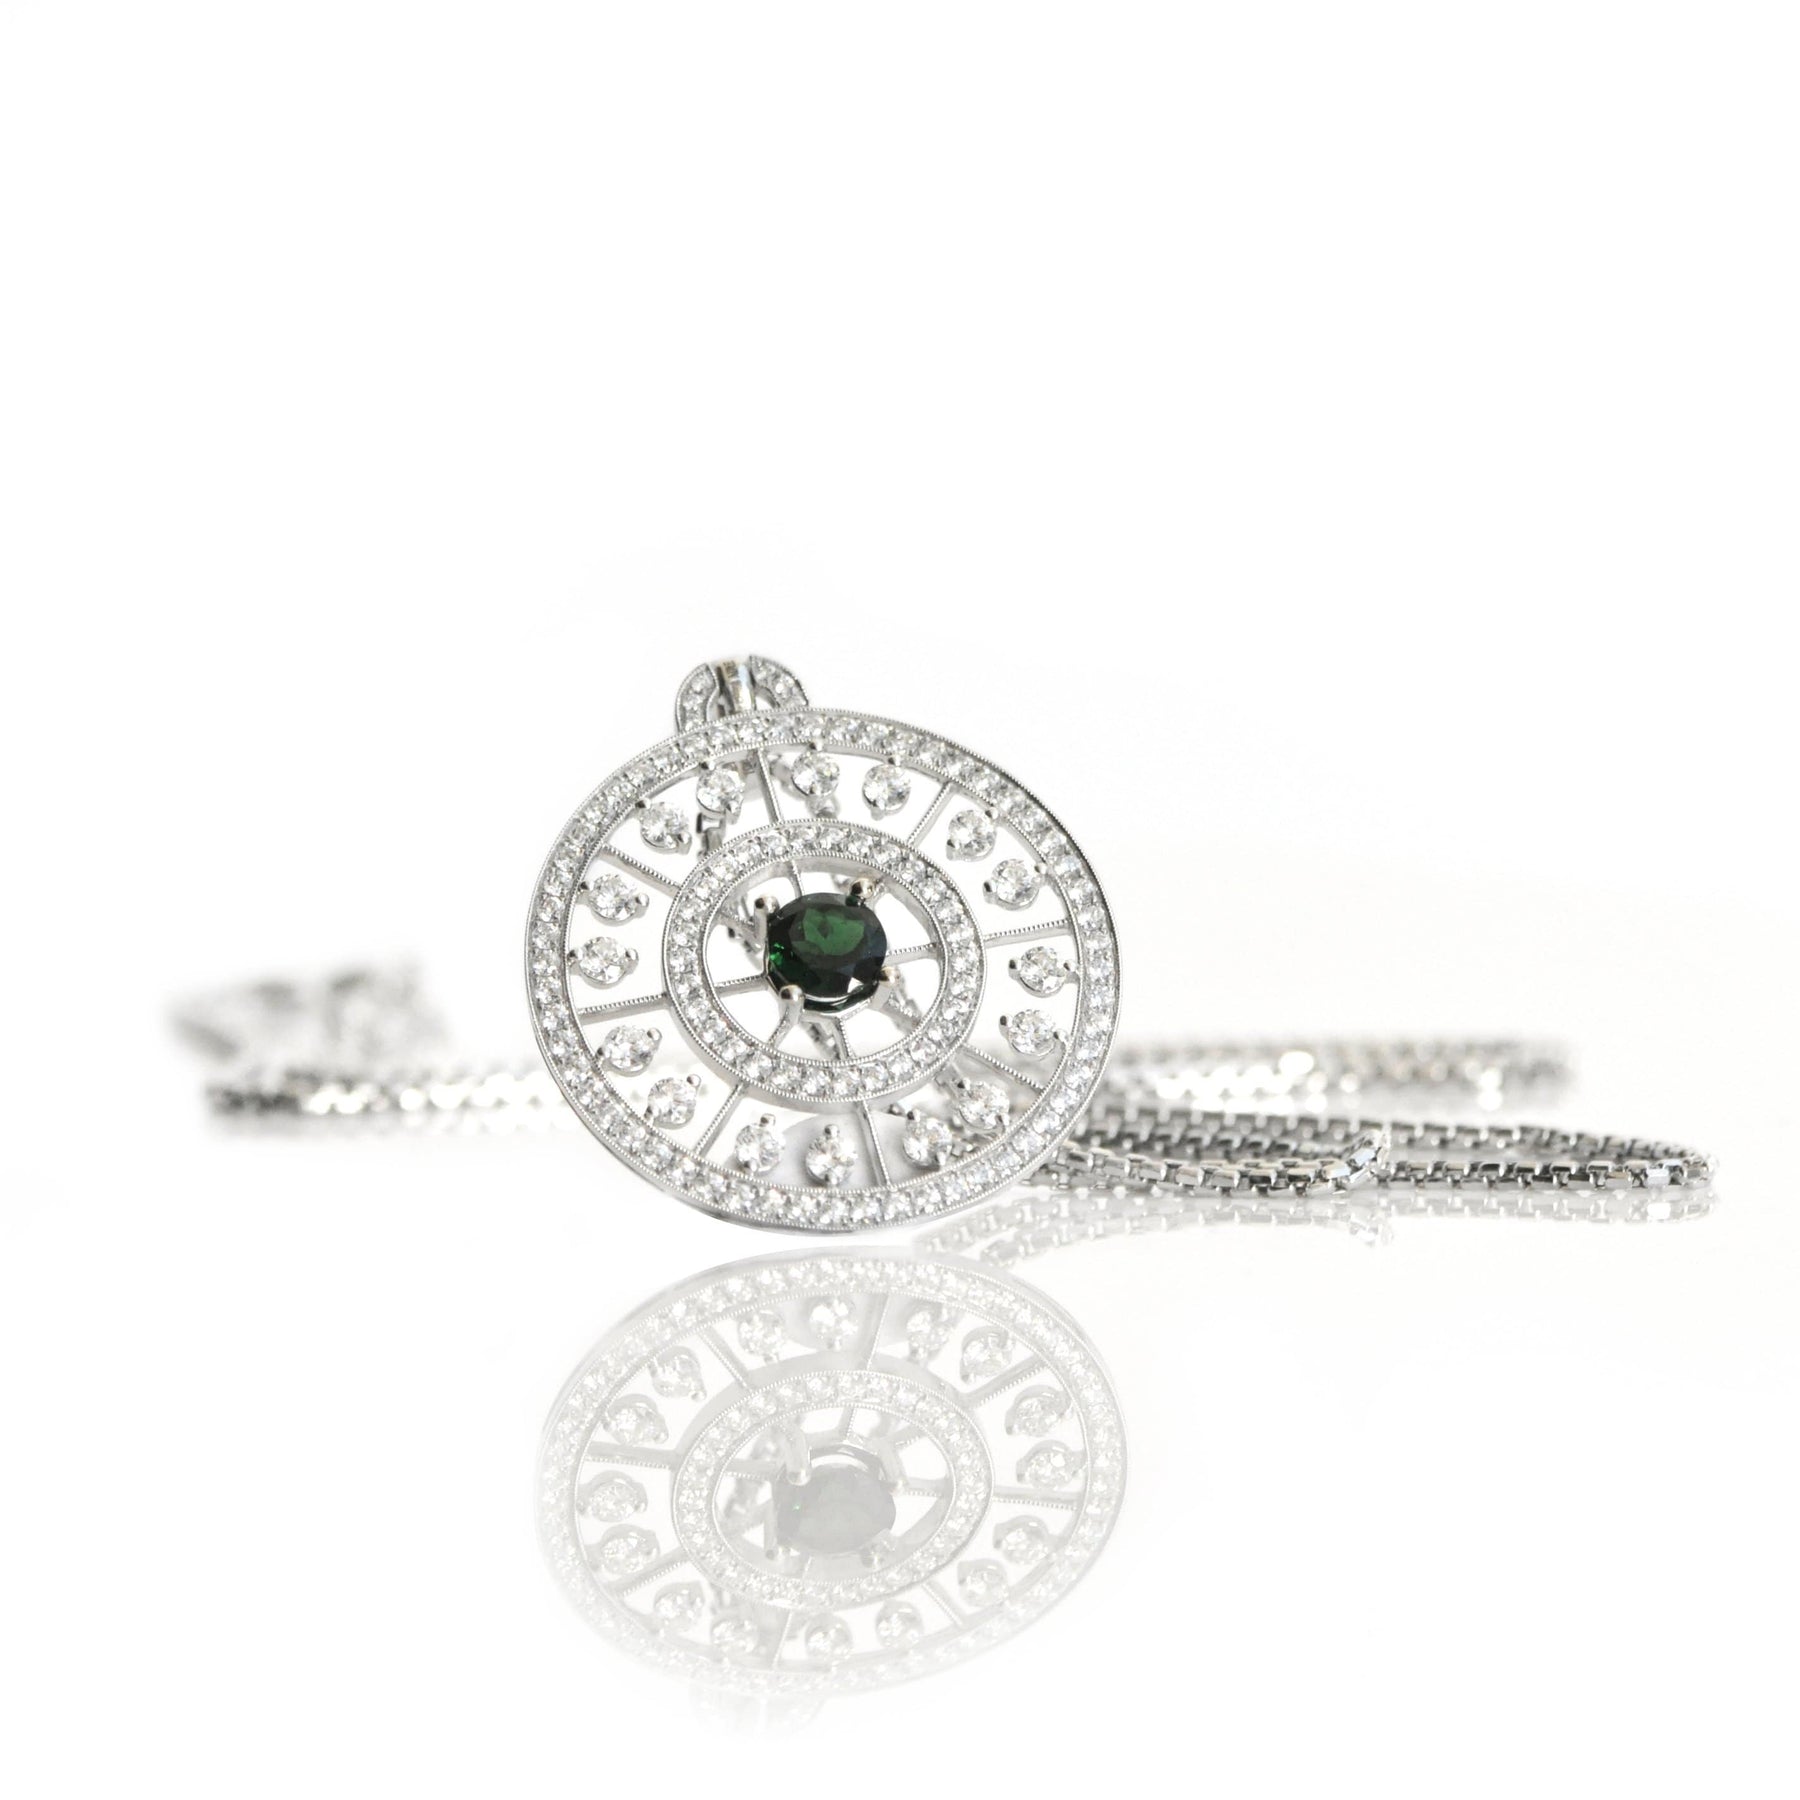 DIAMOND NECKLACE - DUCHESS - Chris Aire Fine Jewelry & Timepieces